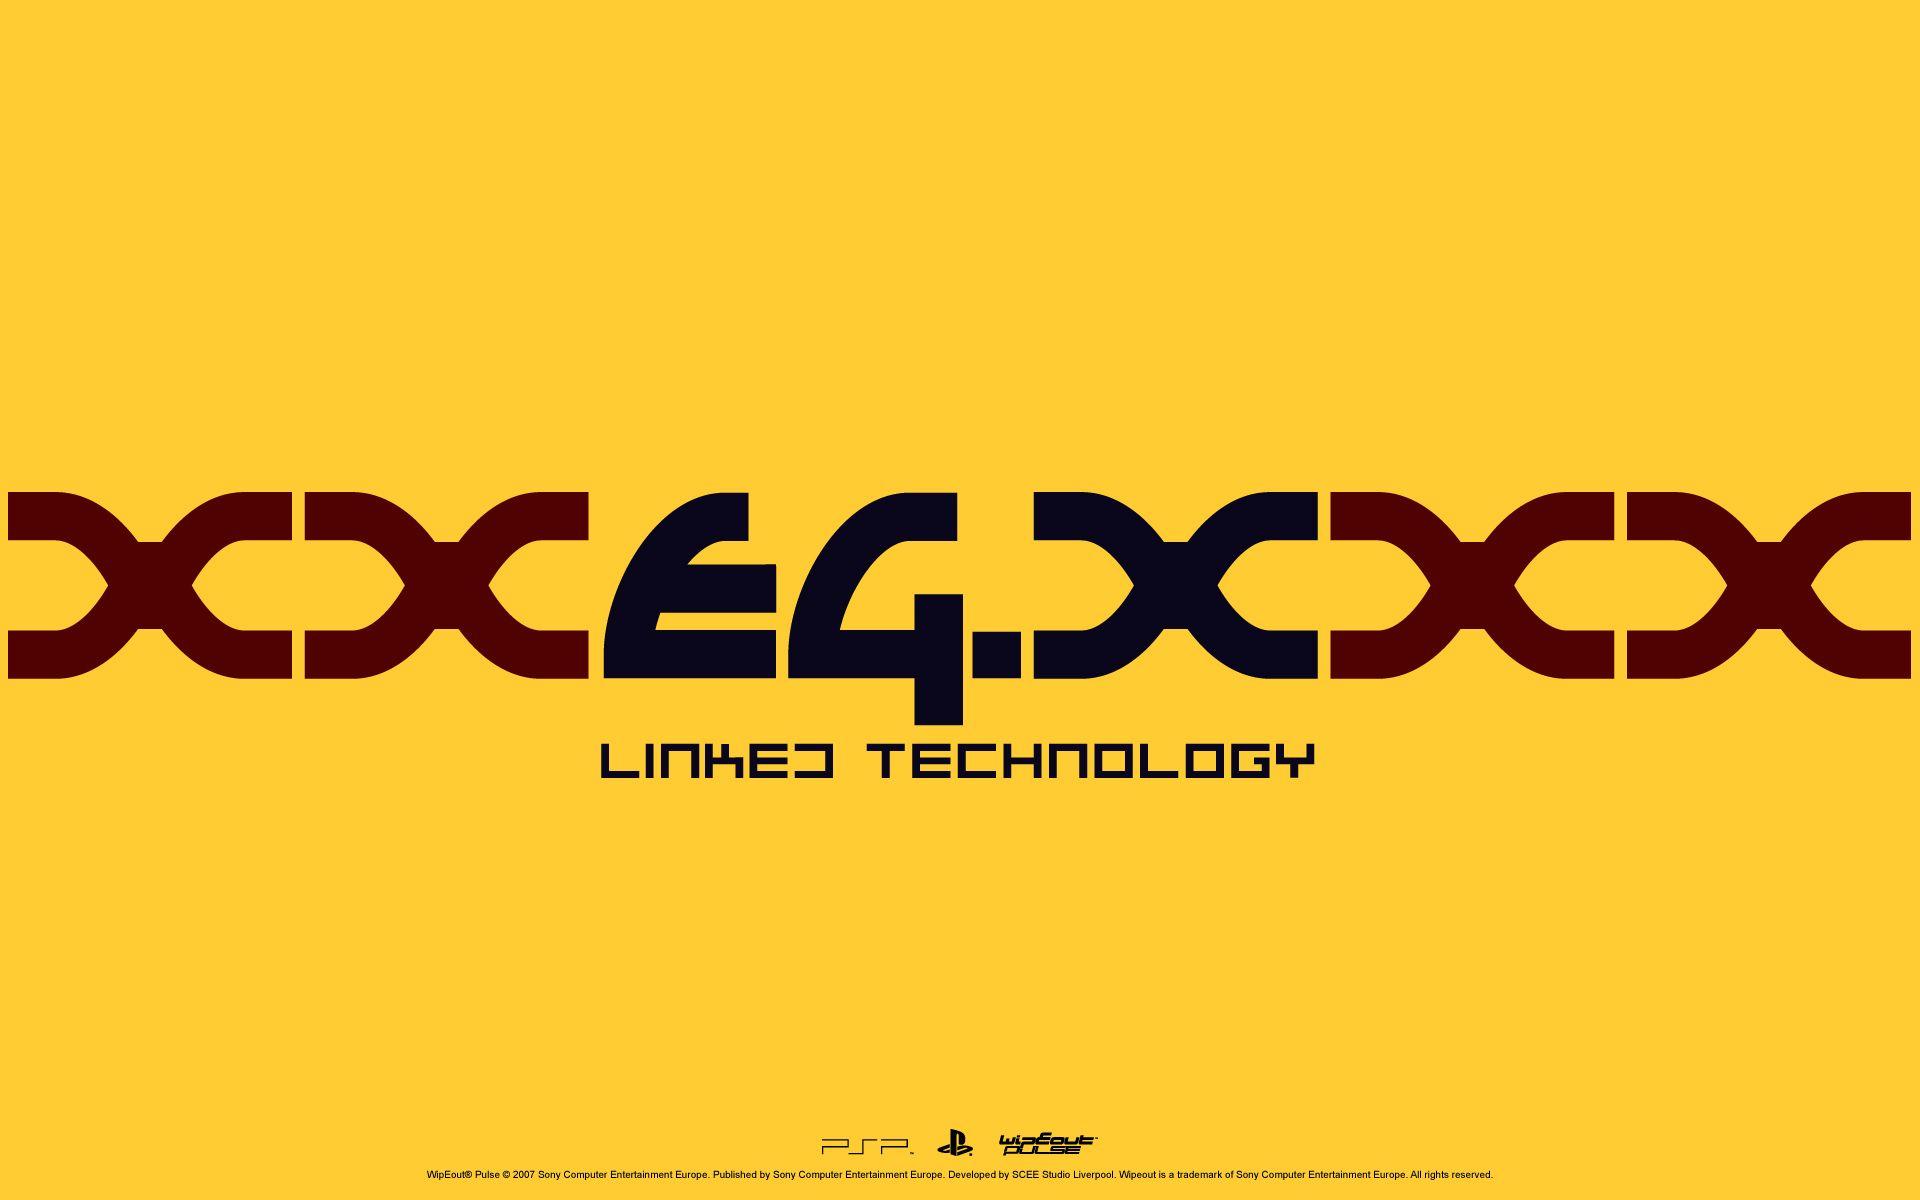 Cool Eg Logo - EG.X #cyberpunk #design #logo | Cyberpunk logos/ads/billboards ...